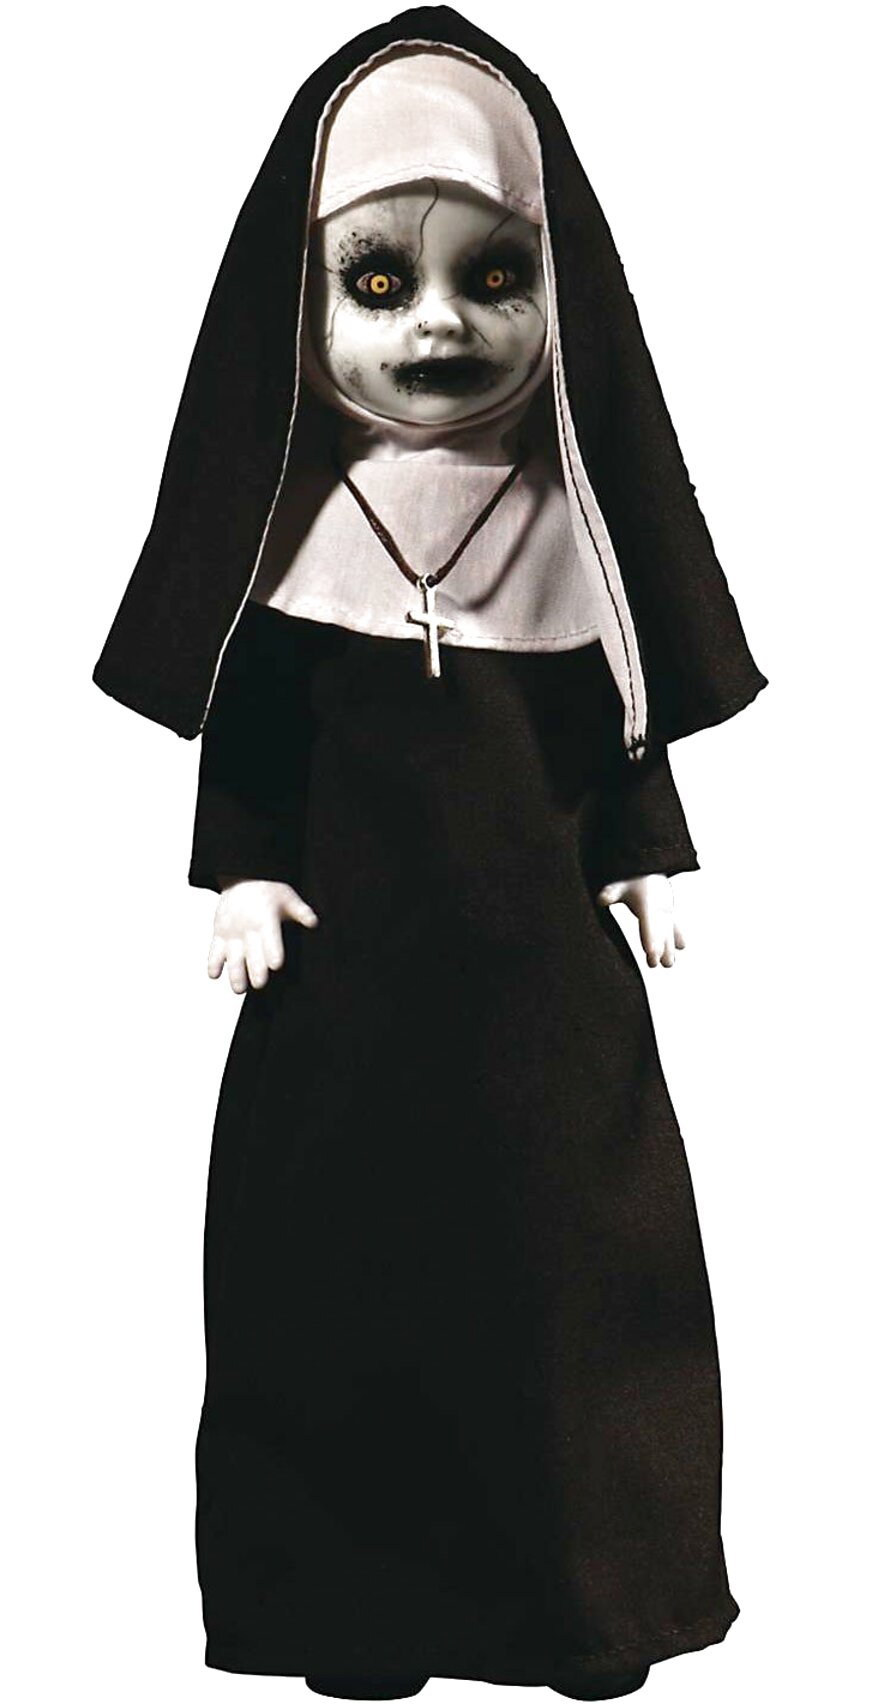 nun dolls for sale